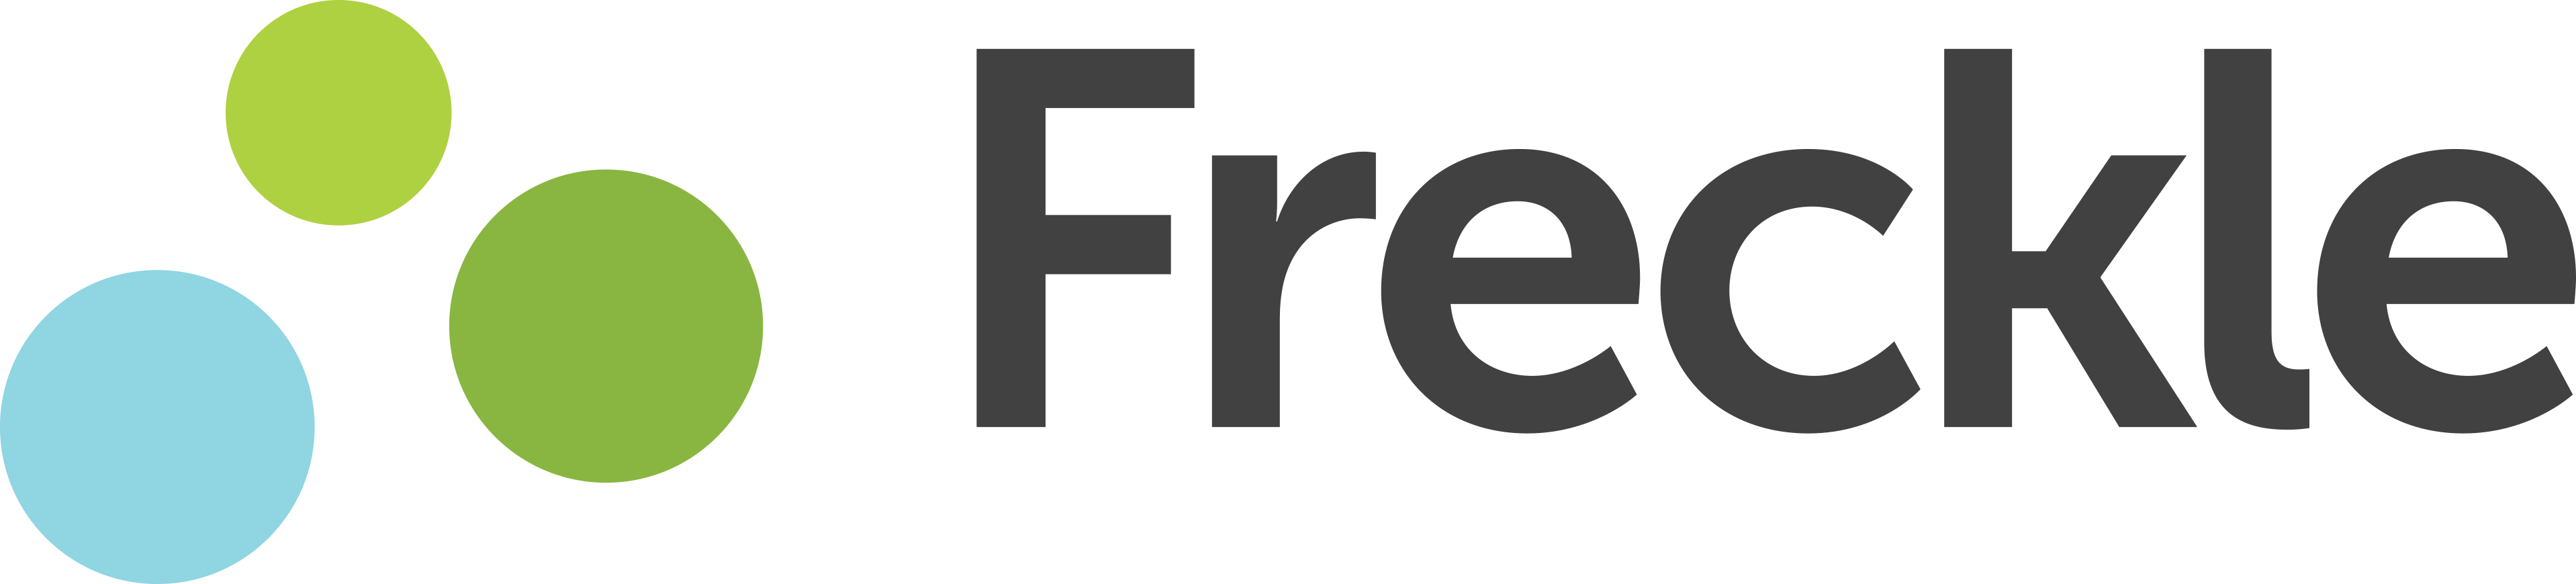 freckle logo